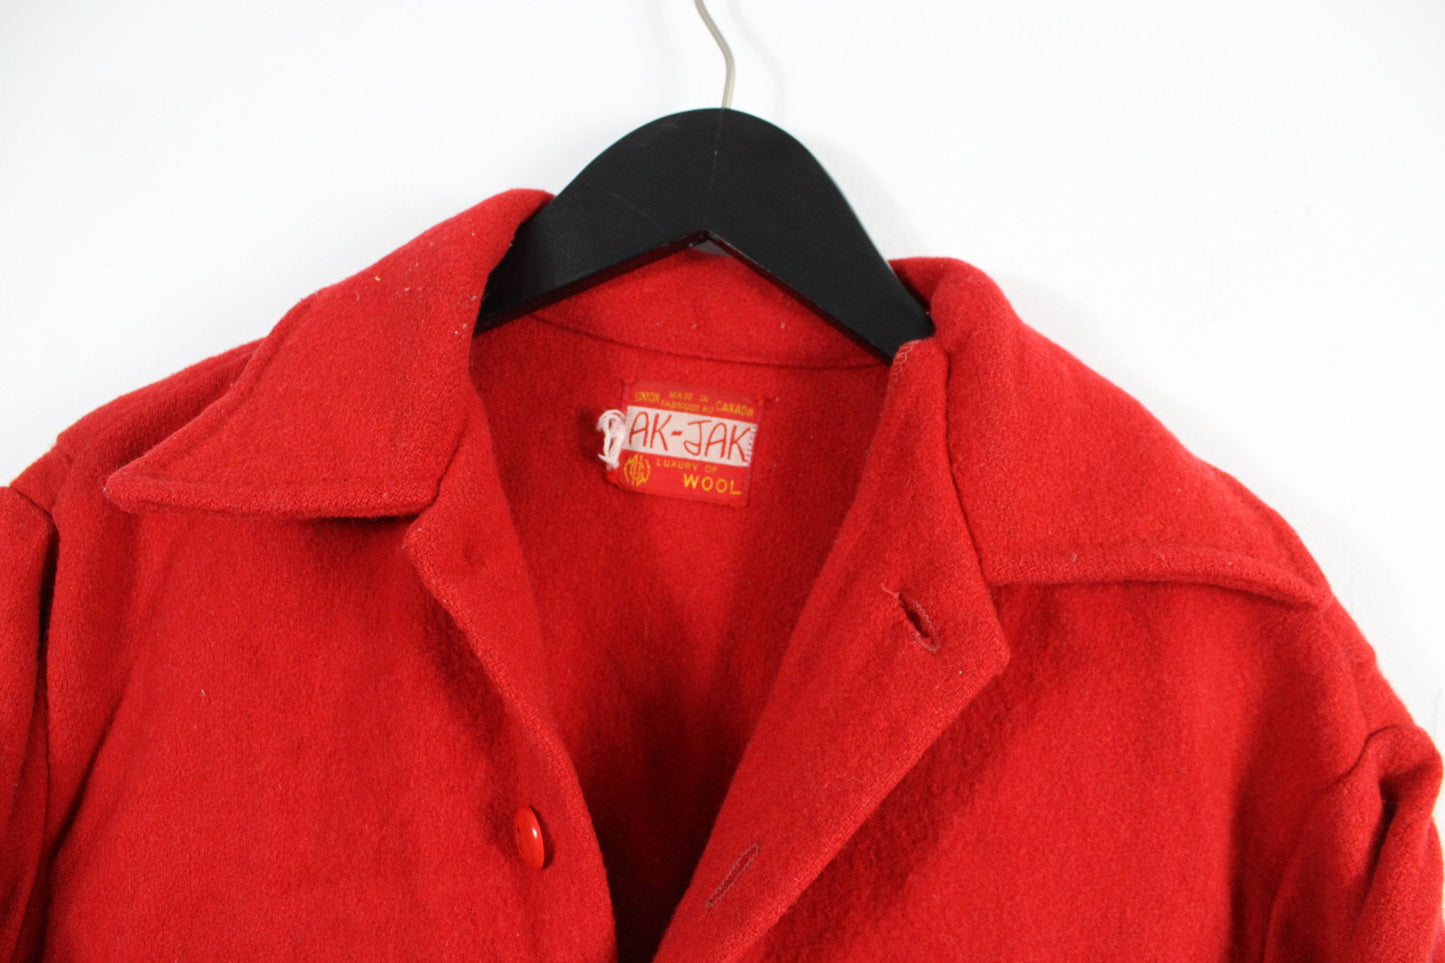 Ak-Jak Wool Jacket / Capote Coat / Bright Red Point Blanket Wool Pea-Coat / Vintage Made In Canada